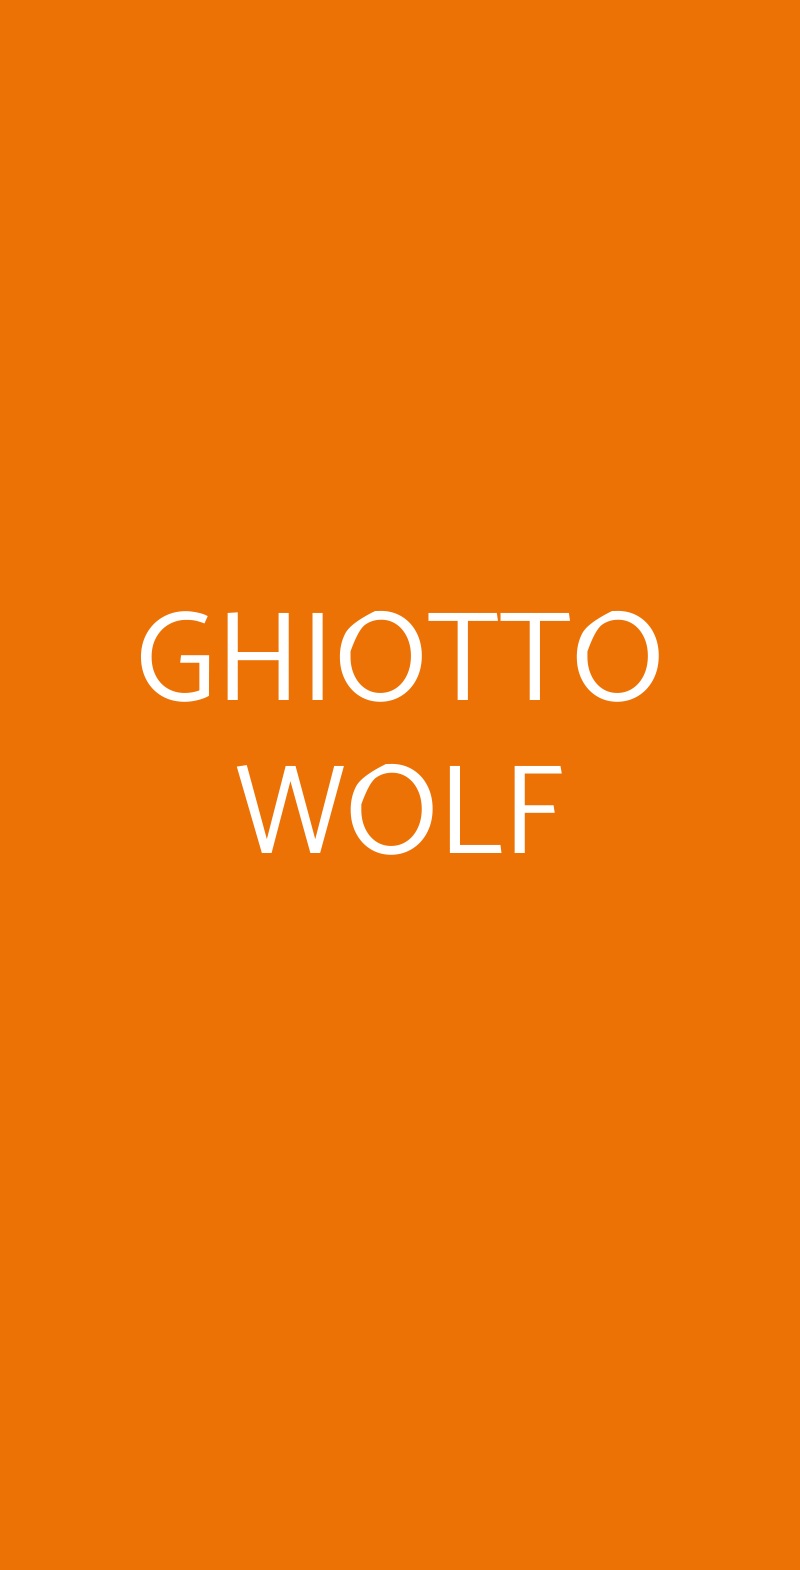 GHIOTTO WOLF Torino menù 1 pagina